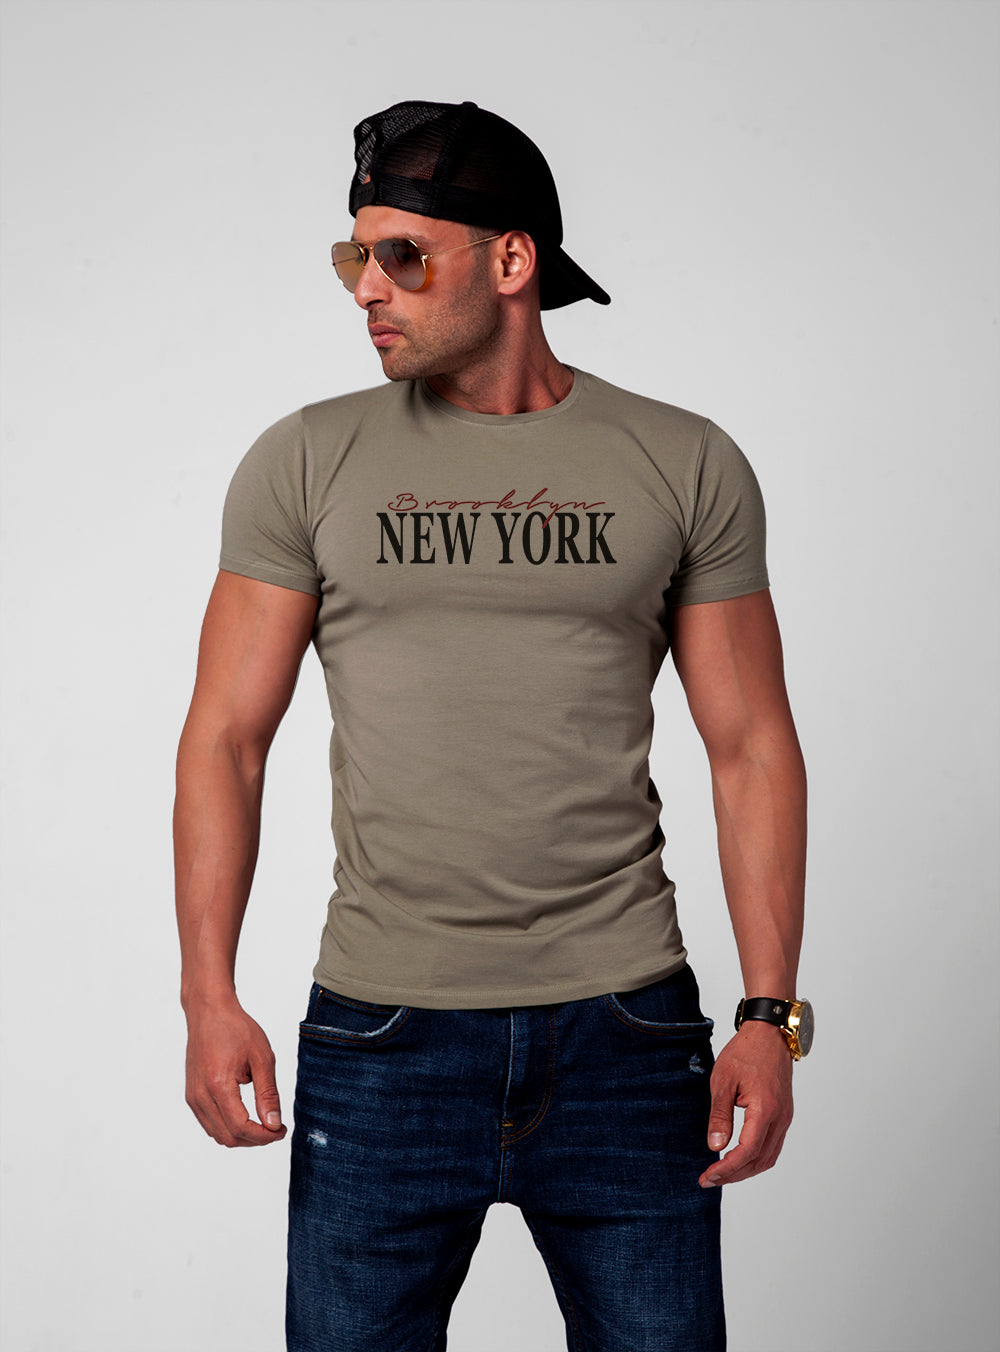 Men's T-shirt "New York Brooklyn" Khaki Gray Beige / Color Option / MD923